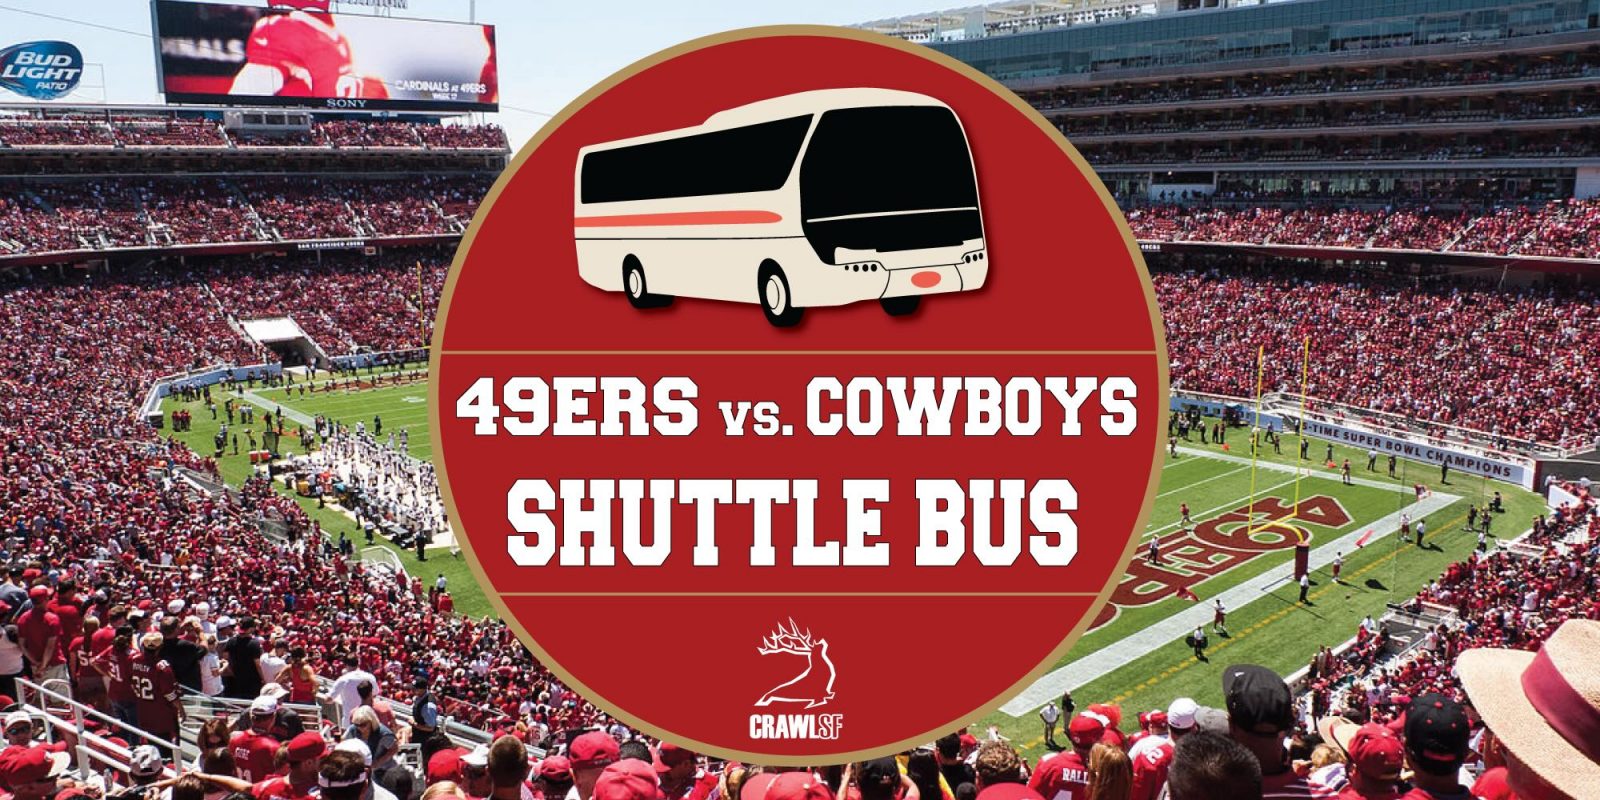 49ers vs. Cowboys Game at Levi's Stadium Shuttle Bus